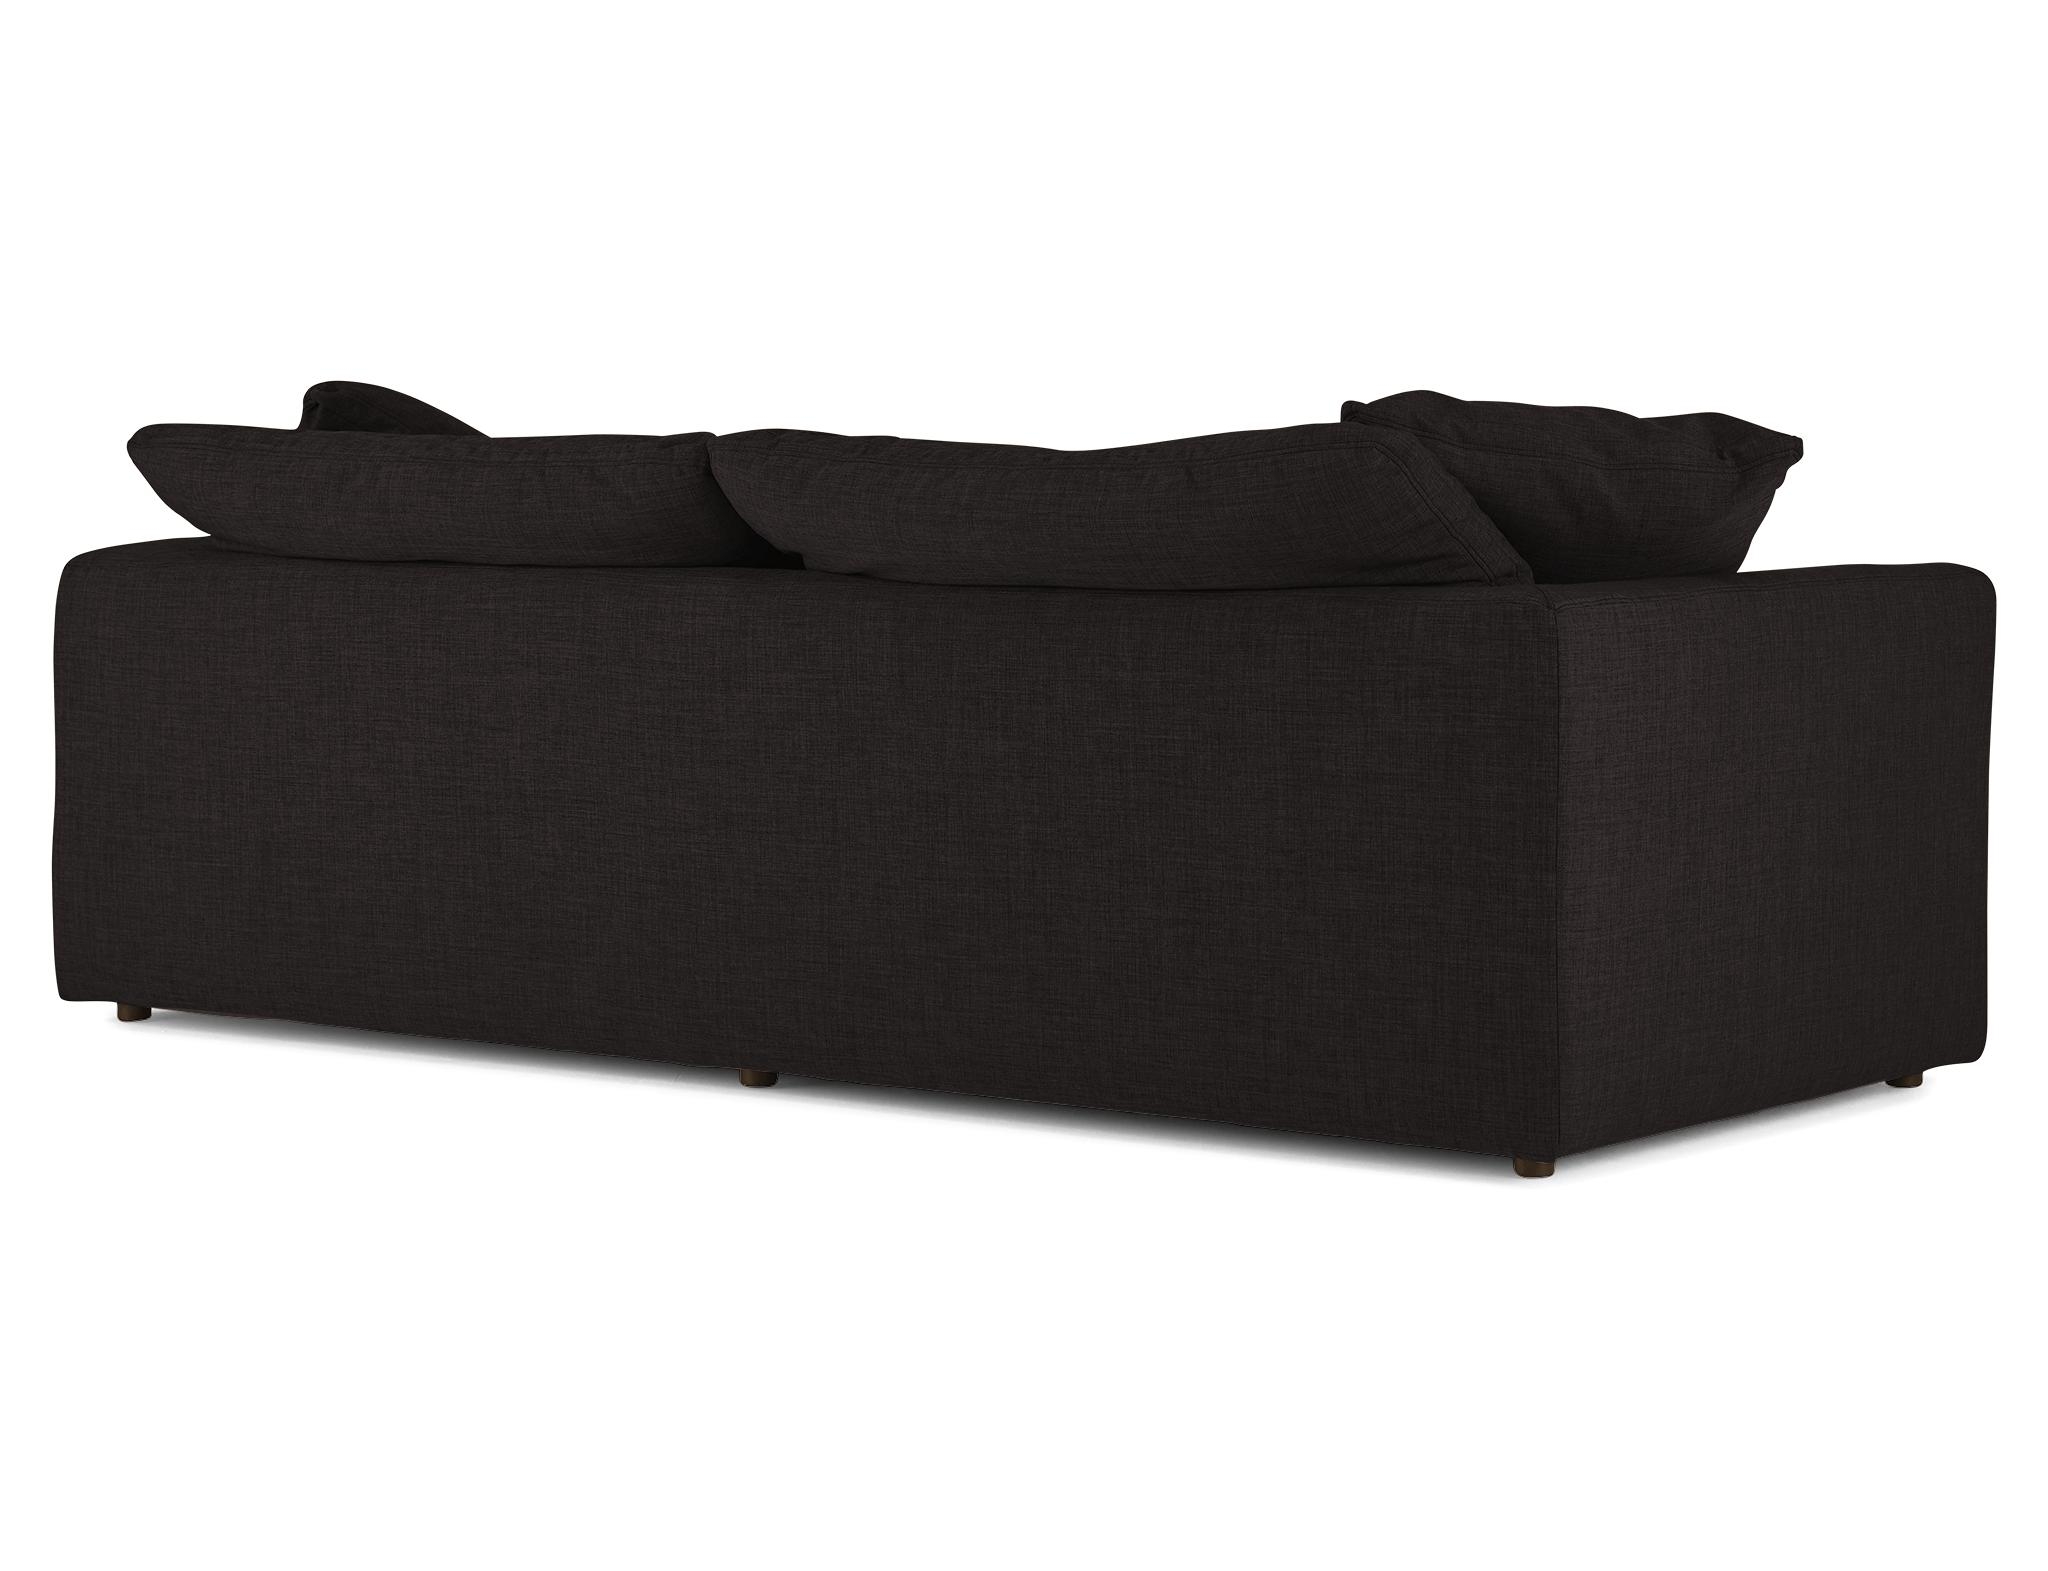 Gray Bryant Mid Century Modern Sofa - Bentley Pewter - Image 3